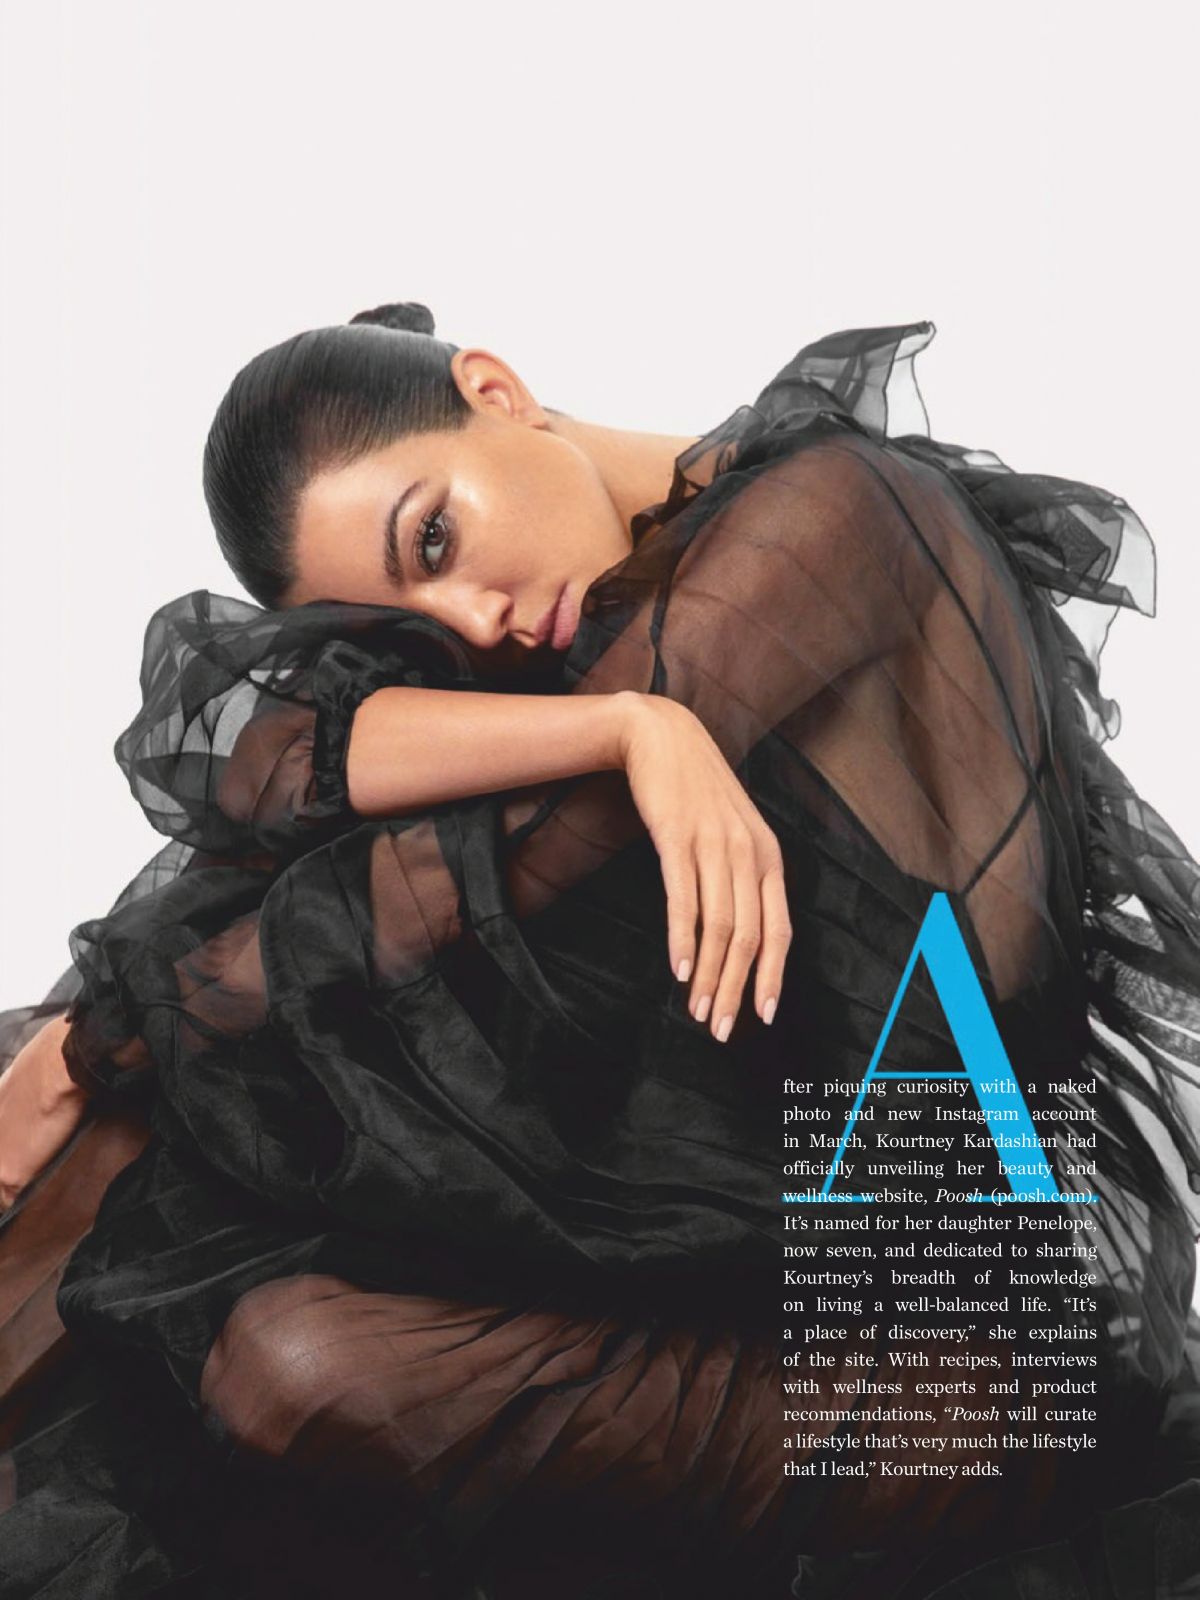 kourtney-kardashian-in-glamour-magazine-south-africa-july-august-2019